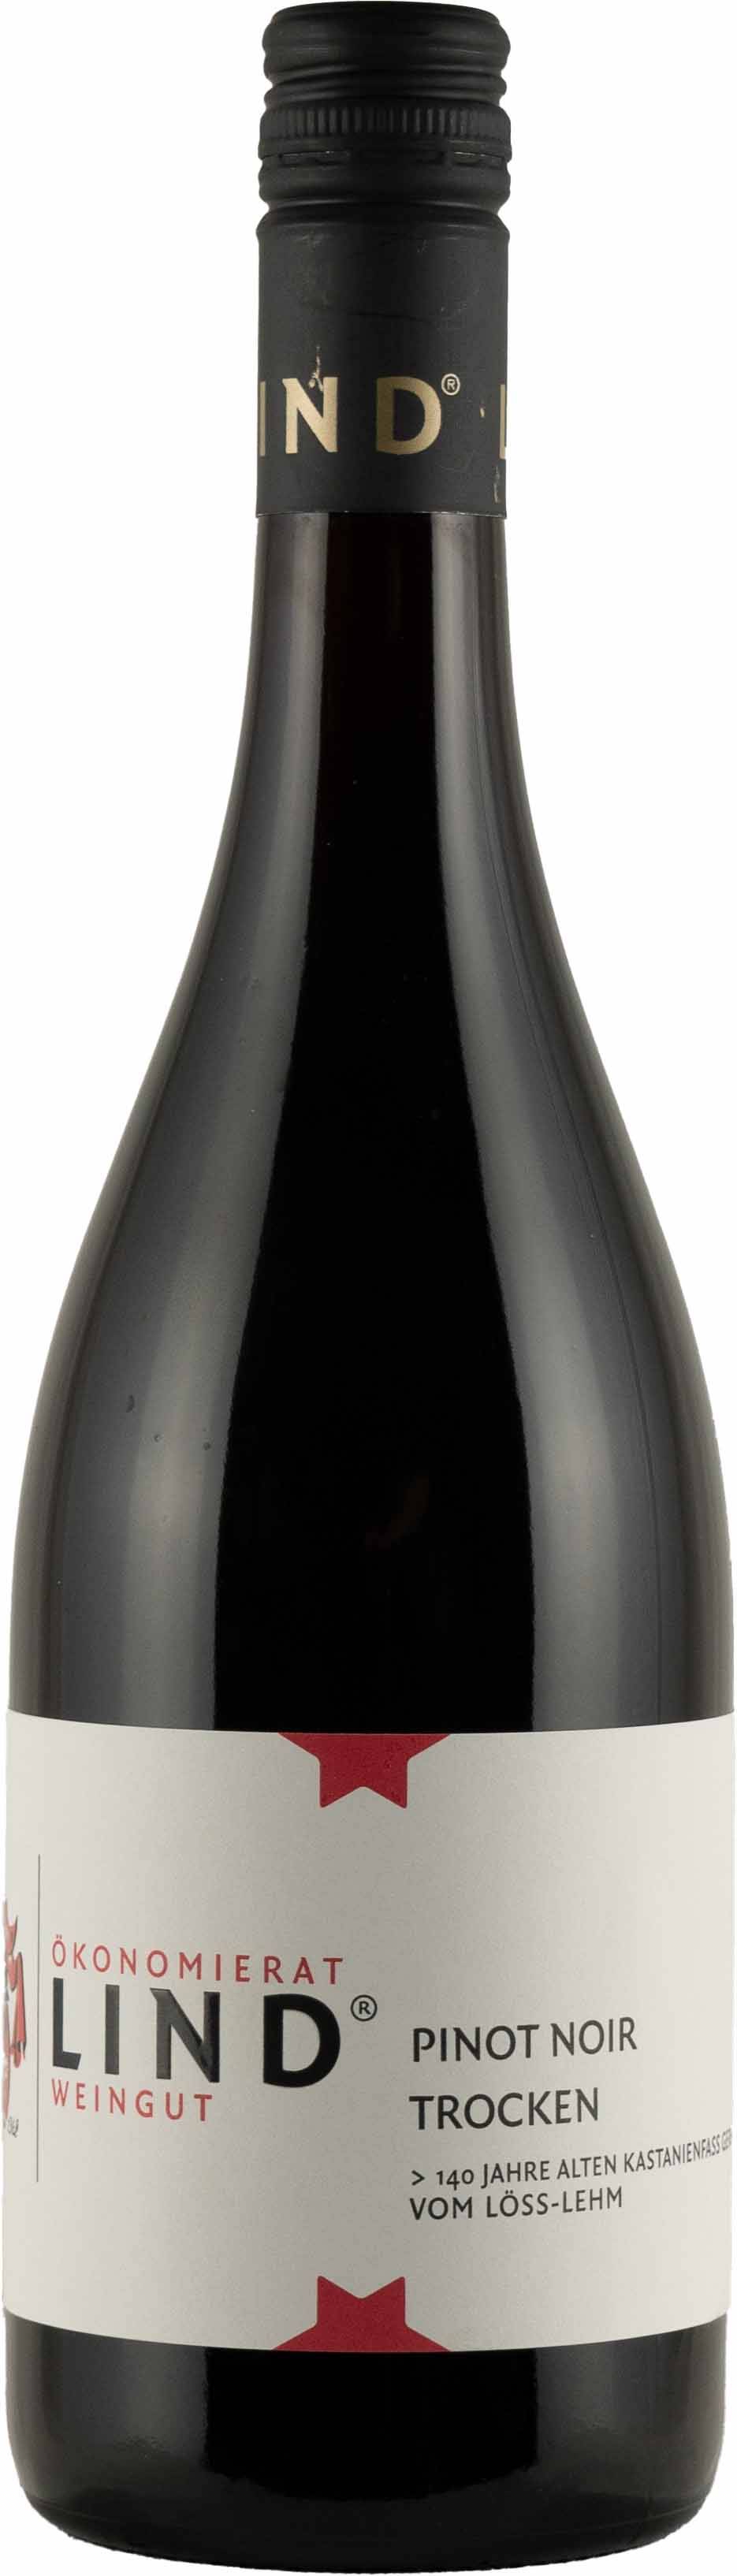 Pinot Noir trocken  2021